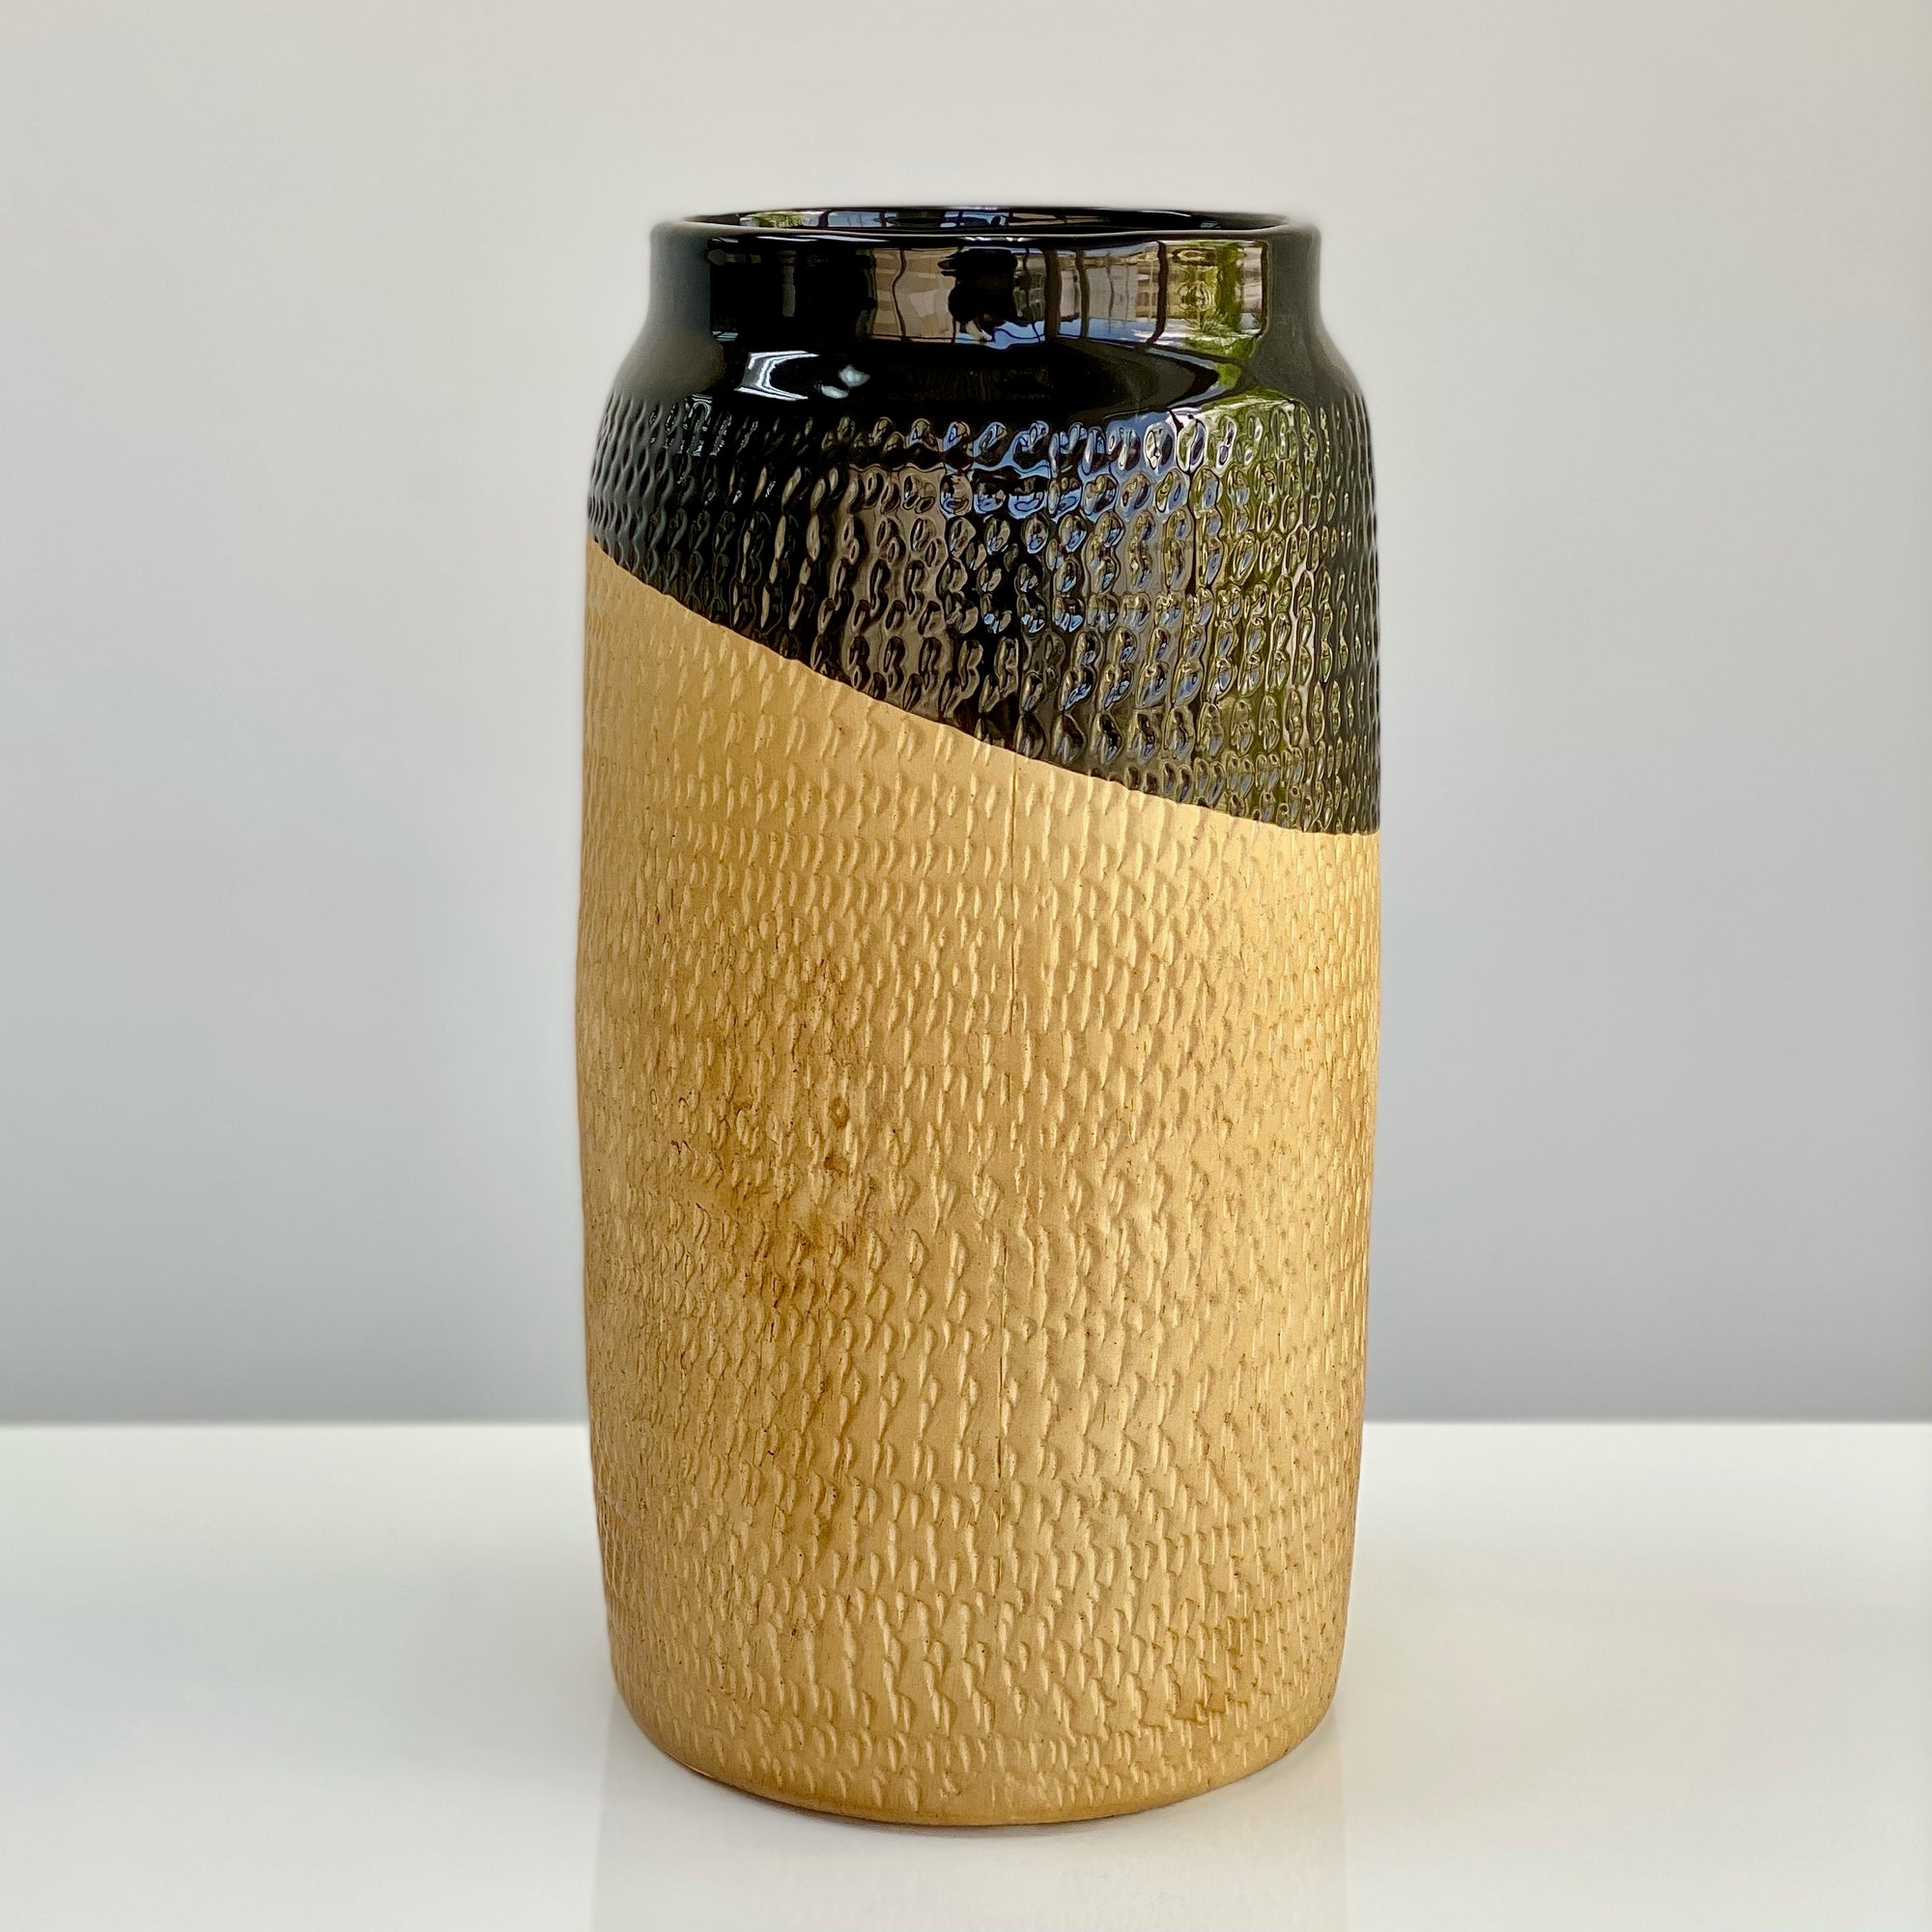 Rattan Look Vase with Black Design